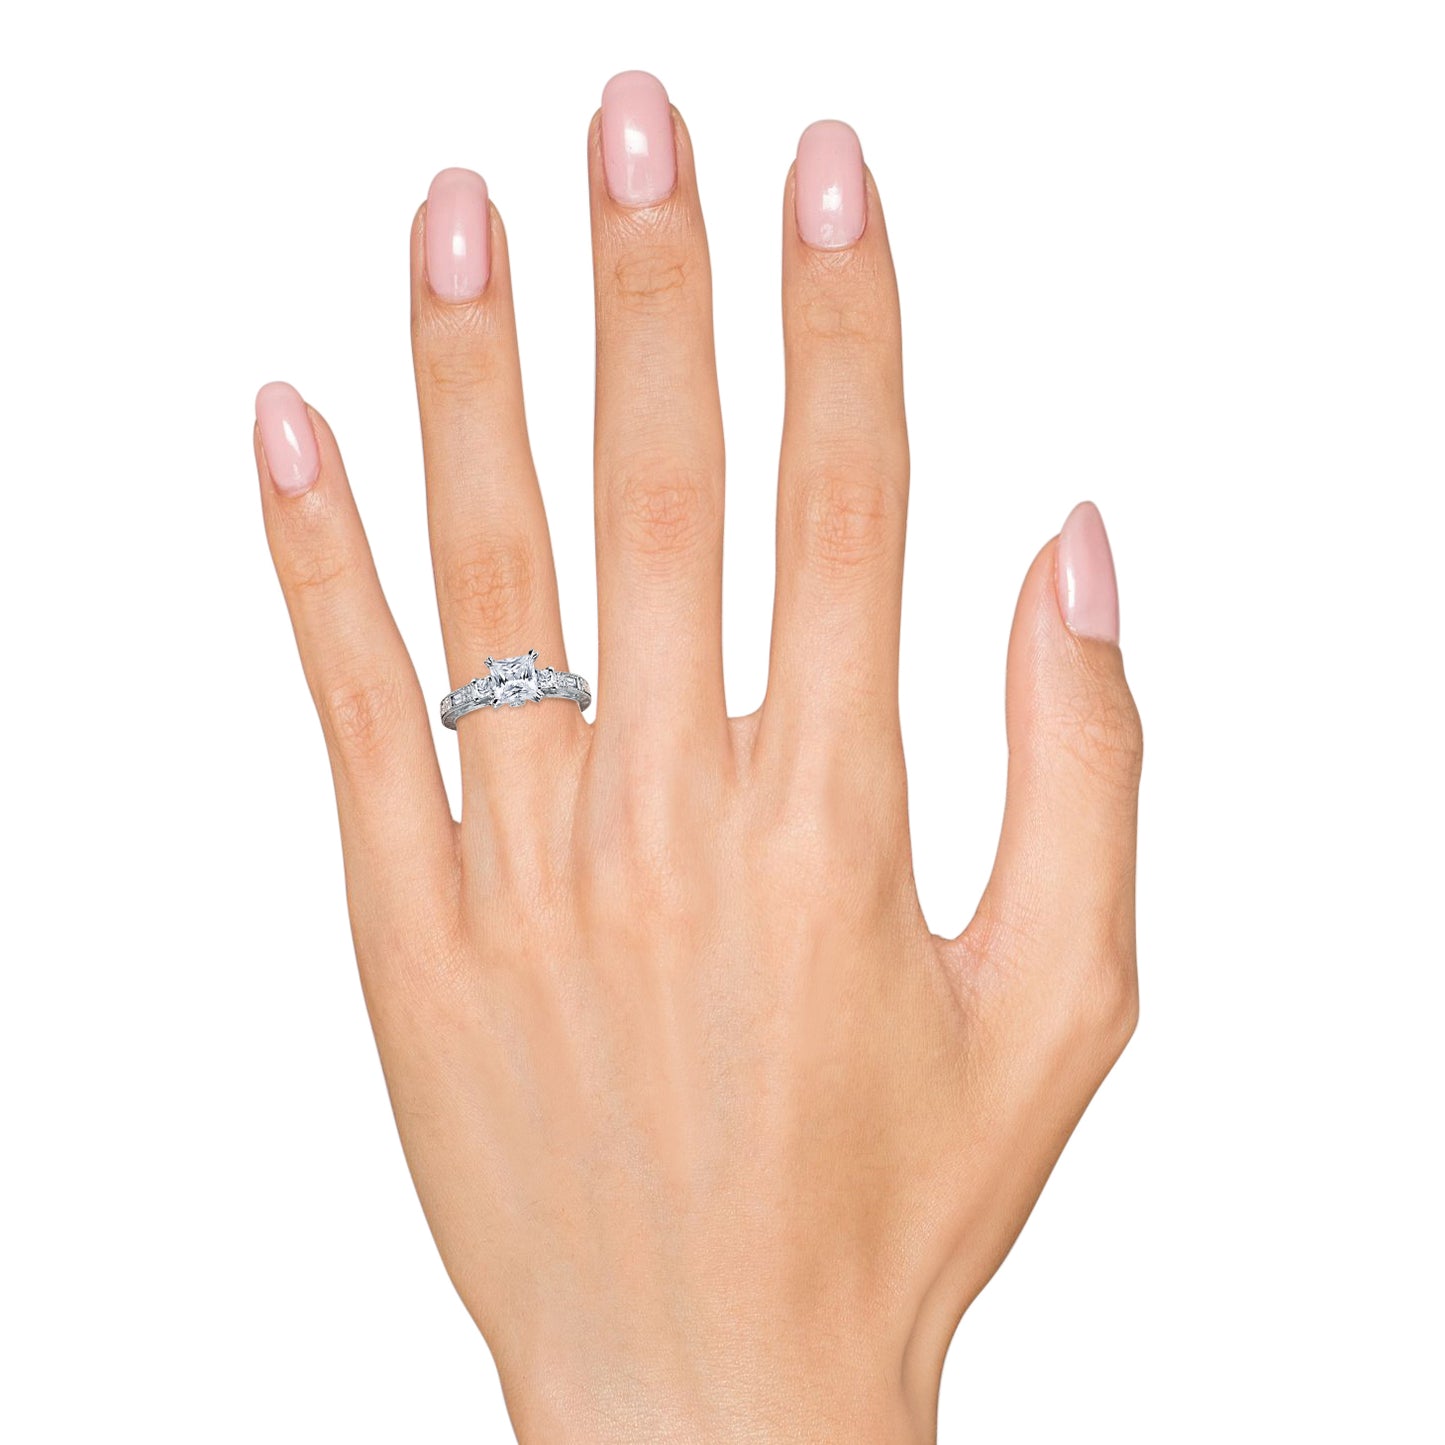 Deco Three Stone Engraved Diamond Engagement Ring